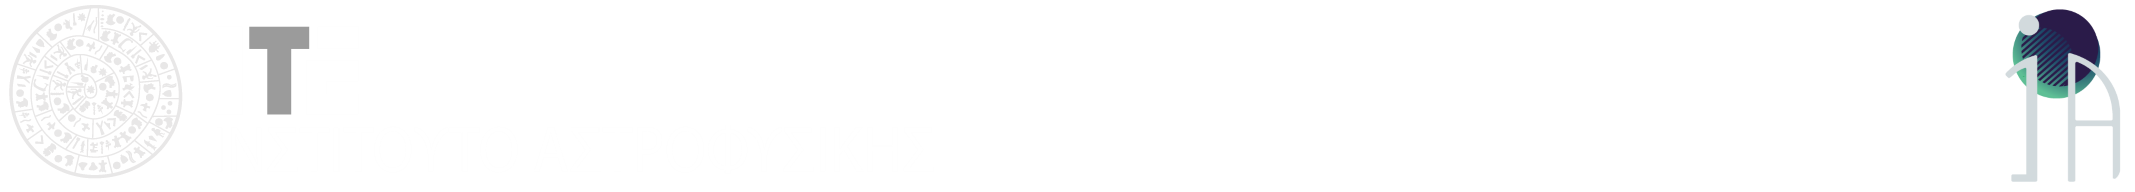 Greek logo for institute of Astrophysics